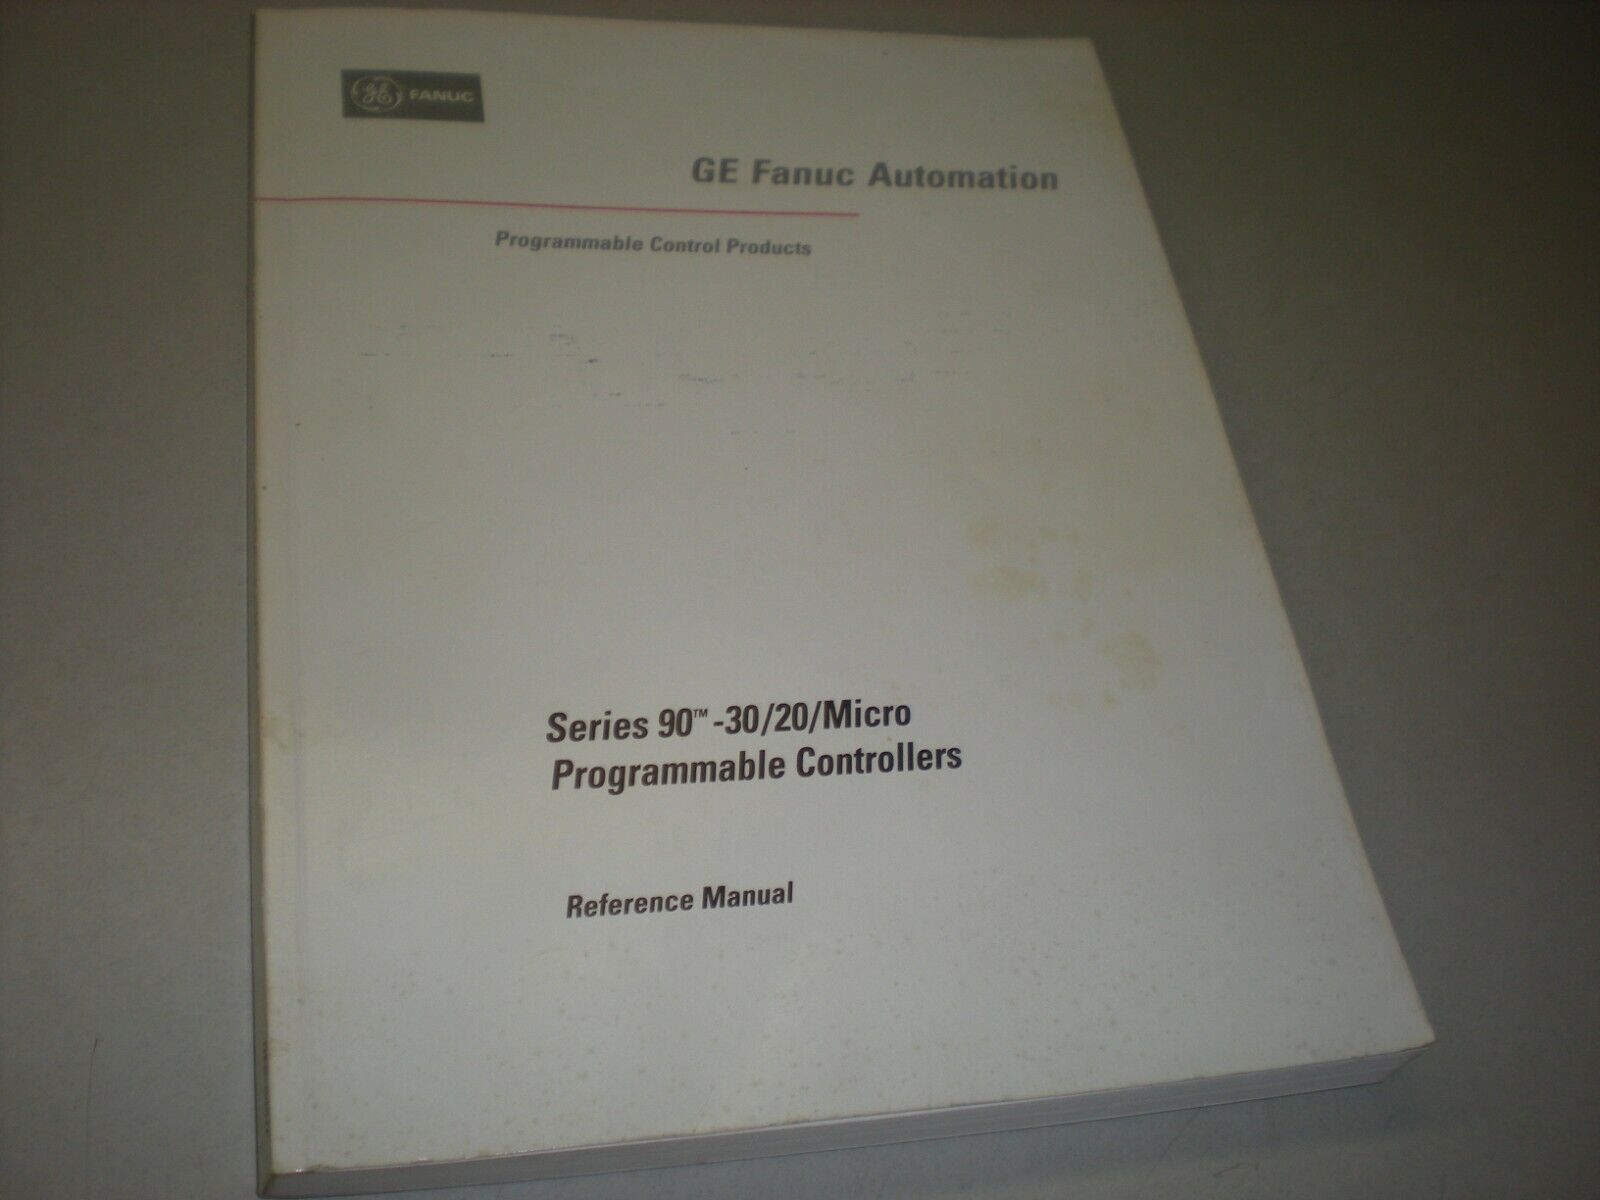 GE Fanuc Series 90 30/20/Micro Programmable Controllers Ref. Manual - GFK-0467F